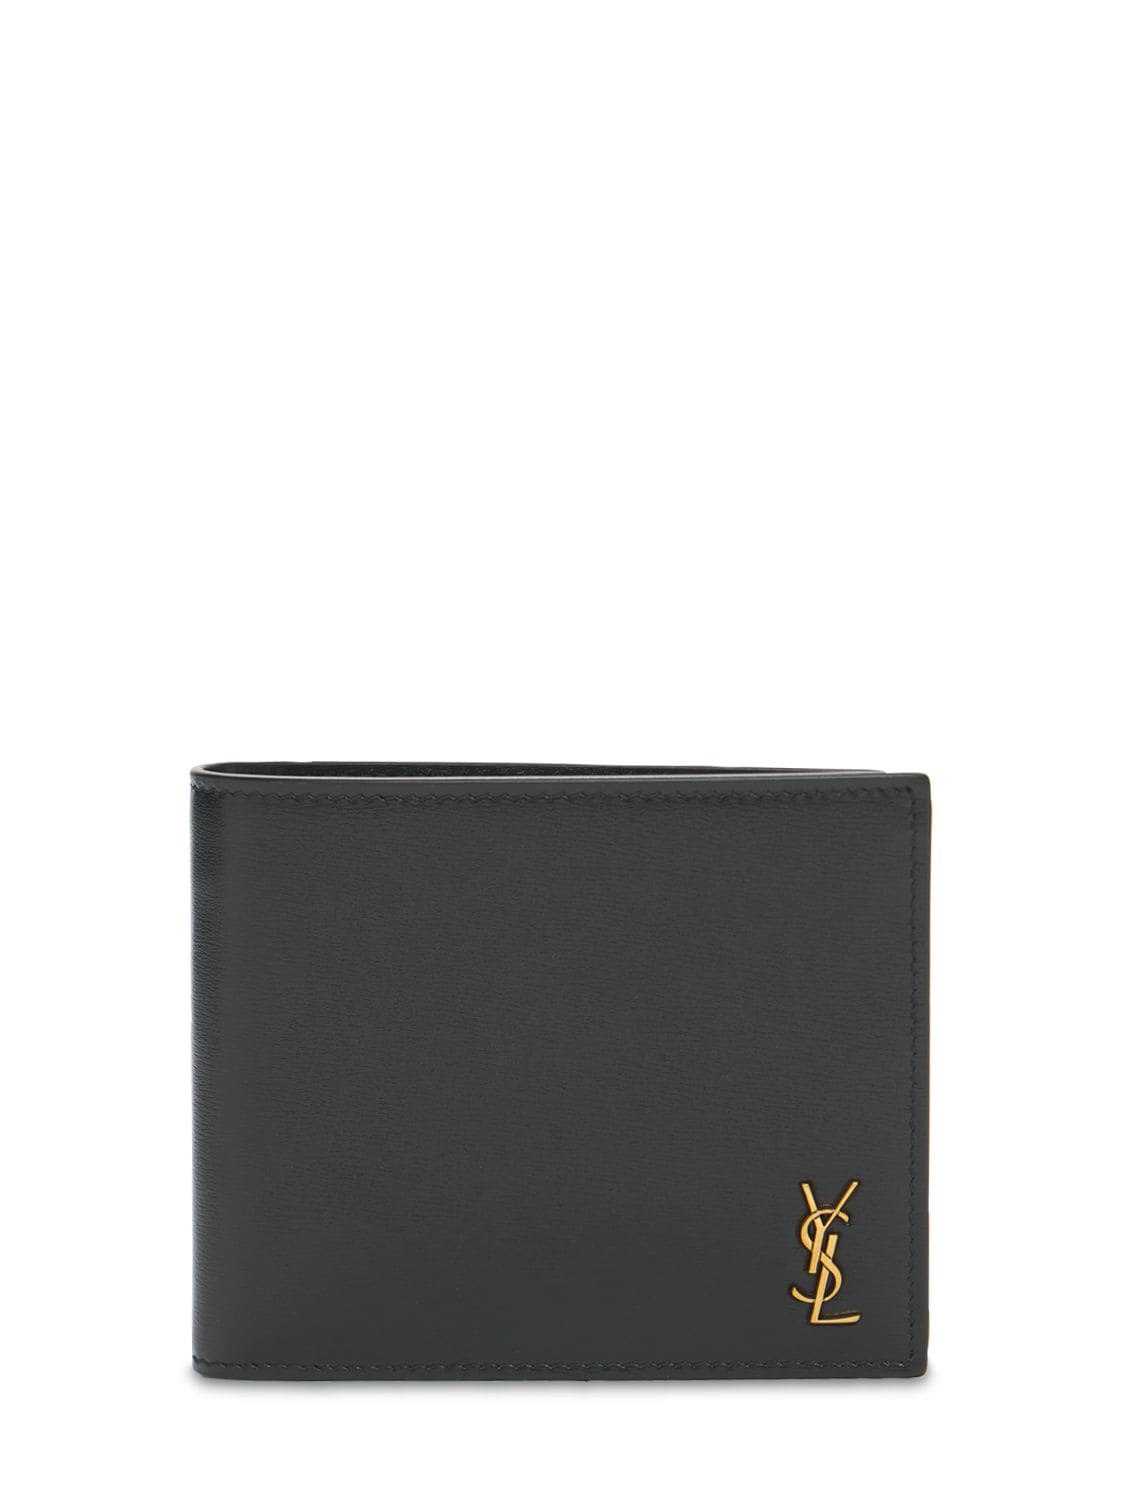 Saint Laurent Monogram Leather Wallet W/ Coin Purse In Black